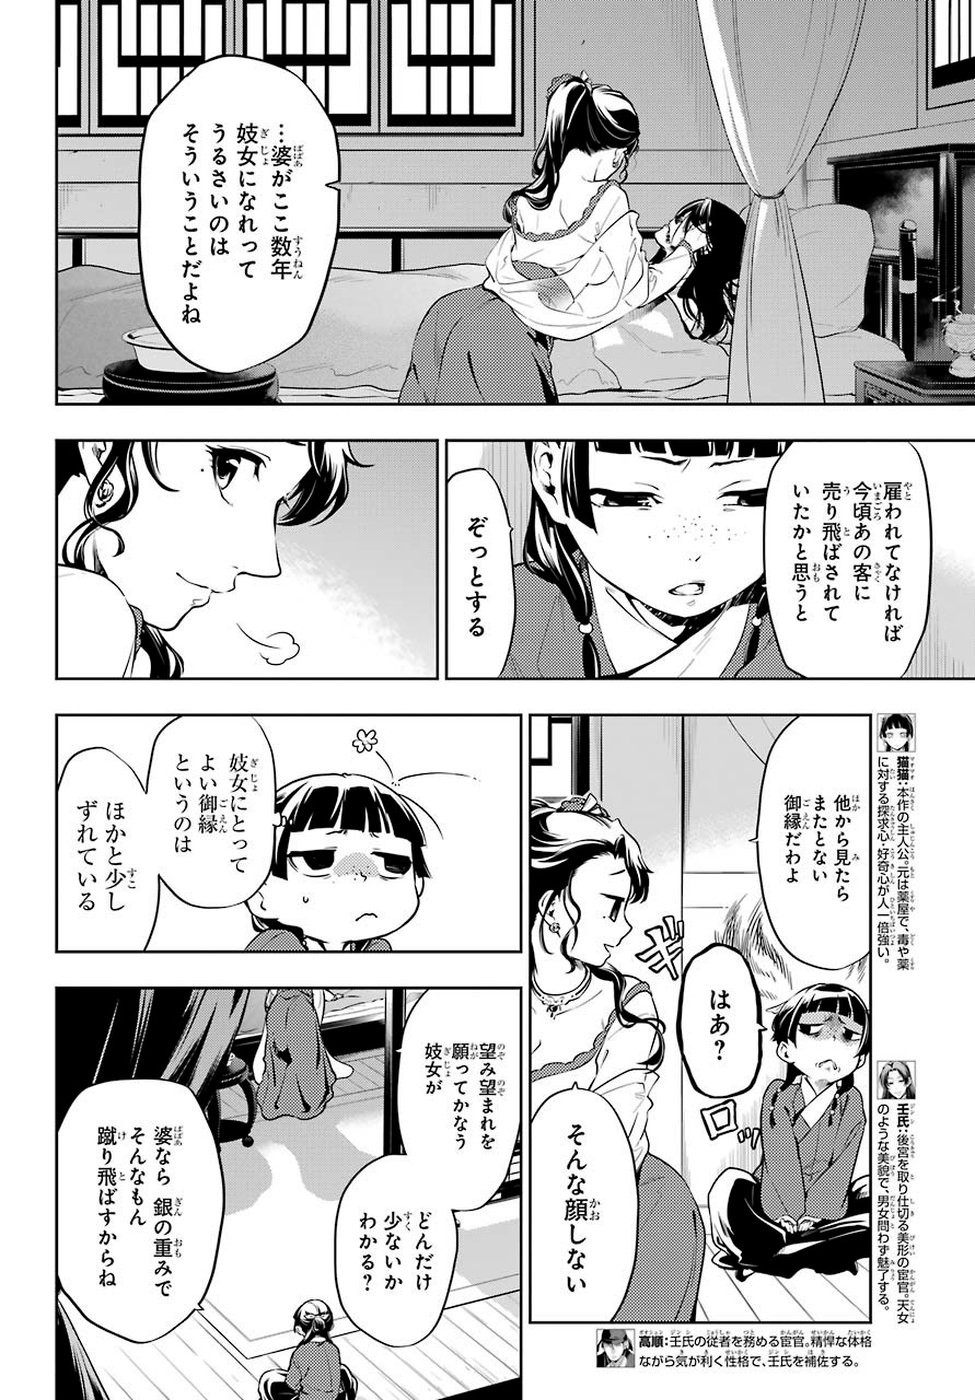 Kusuriya no Hitorigoto - Chapter 29.1 - Page 2